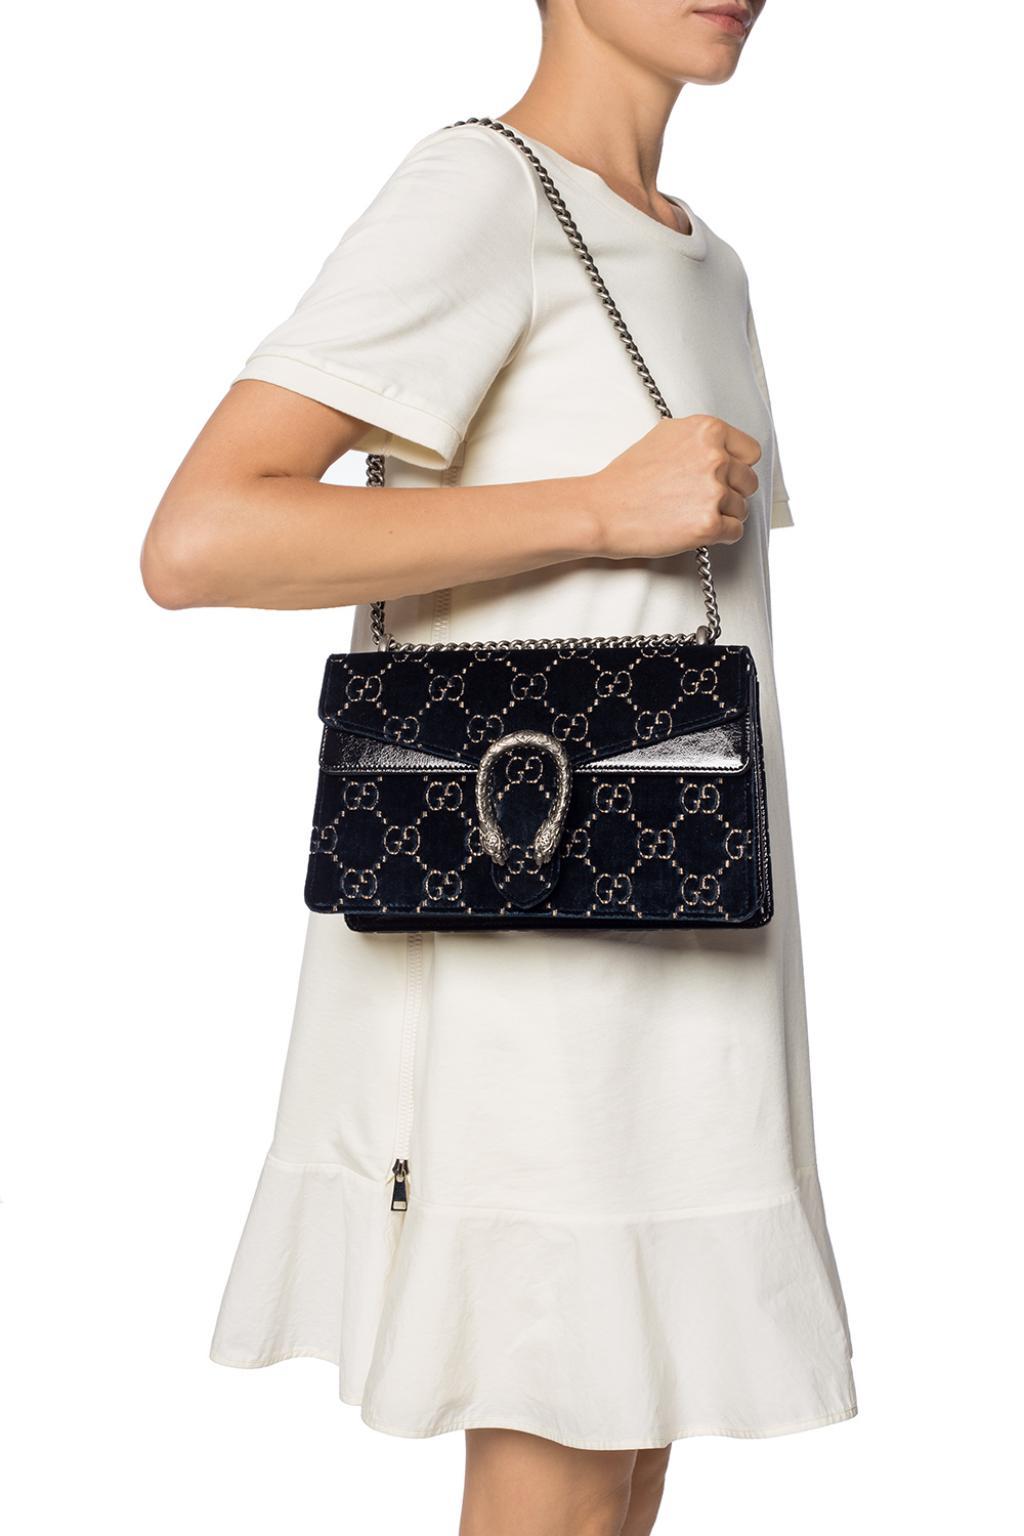 Gucci Dionysus Gg Small Velvet & Leather Shoulder Bag in Blue | Lyst